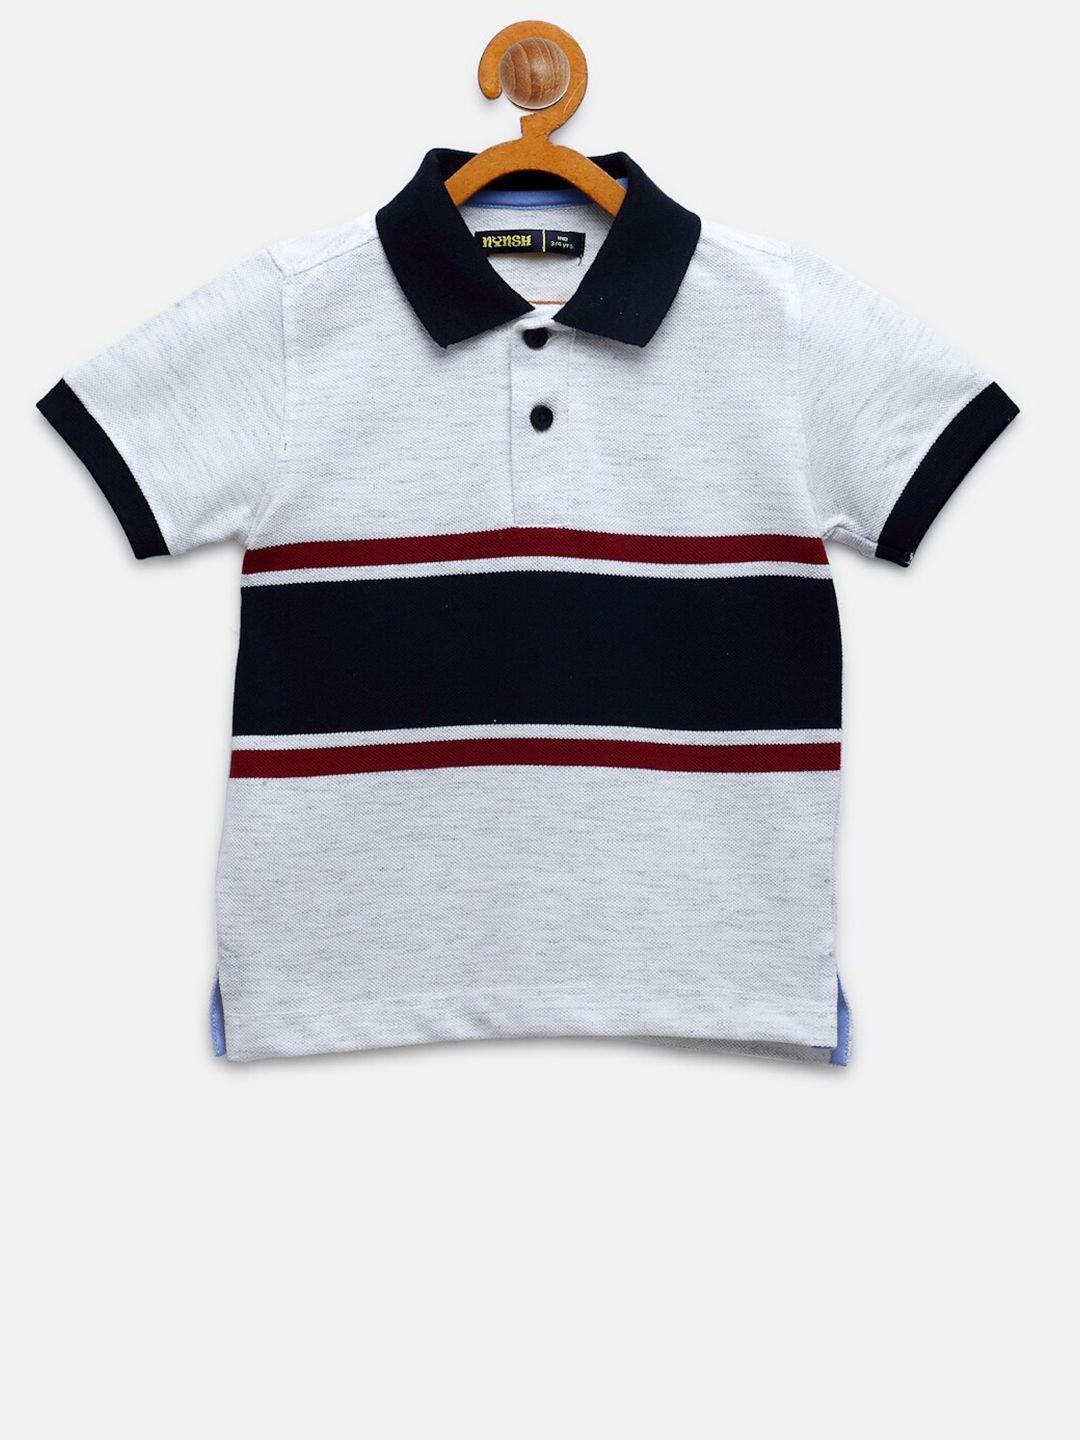 nynsh boys off white & black striped cotton polo collar t-shirt